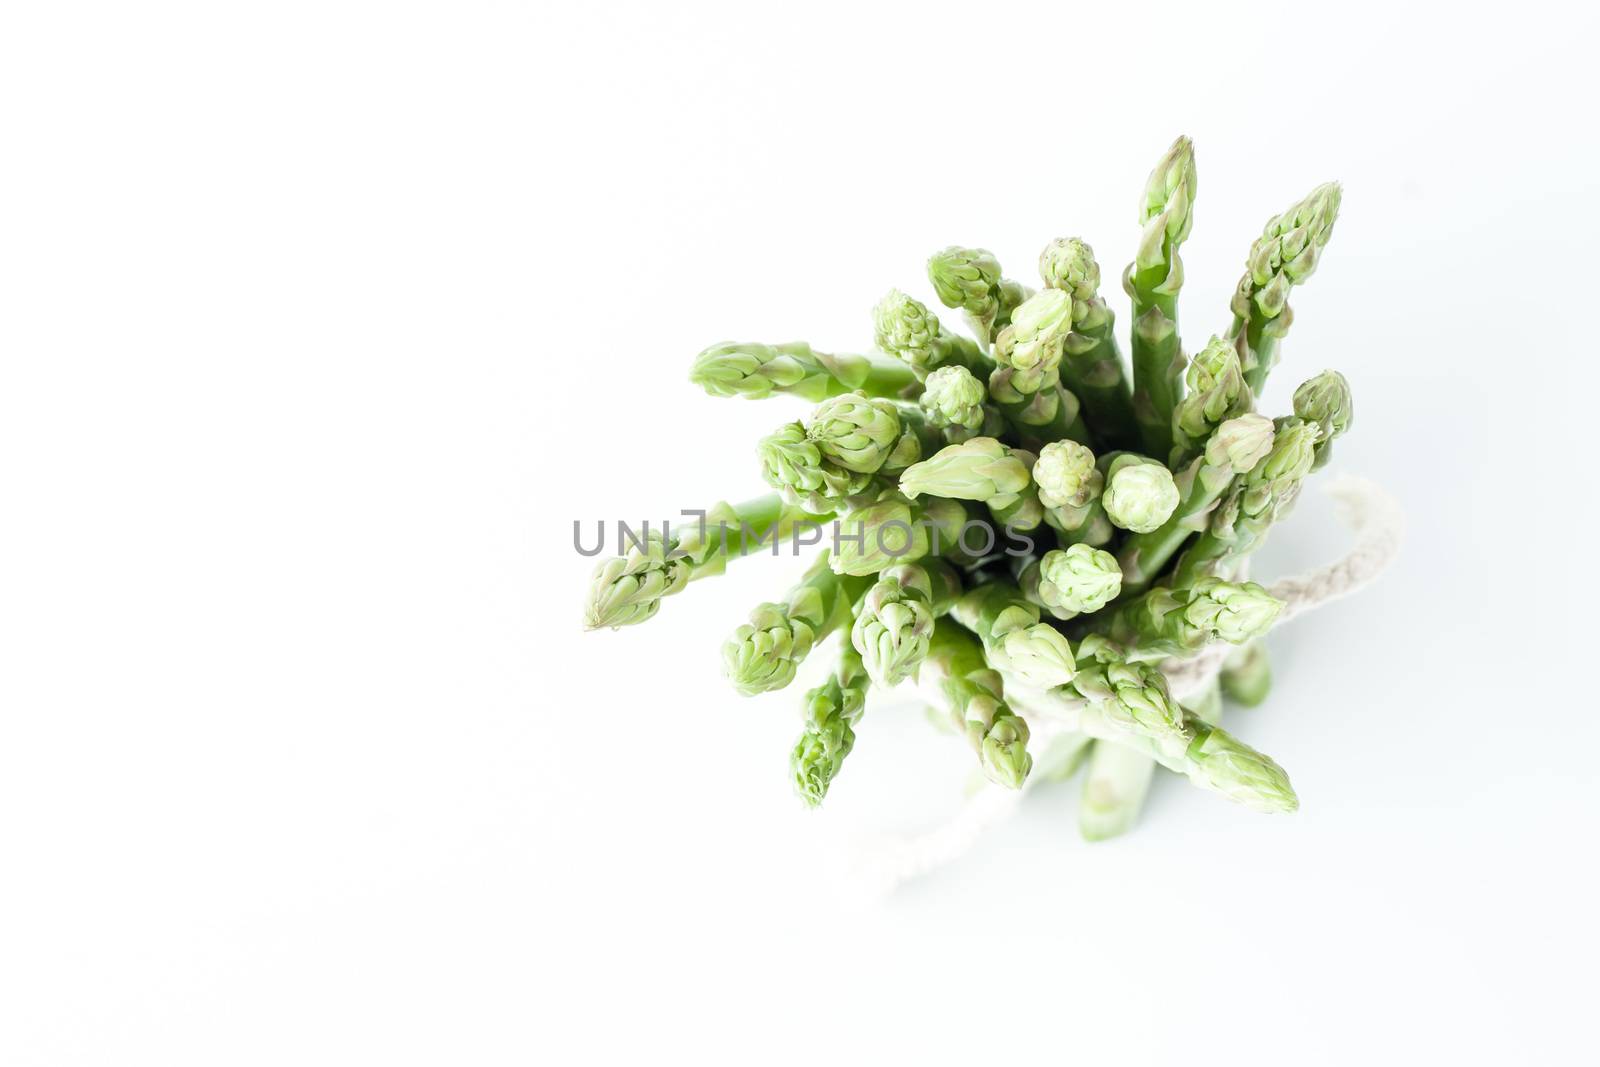 Bundle of asparagus on the white background by Deniskarpenkov